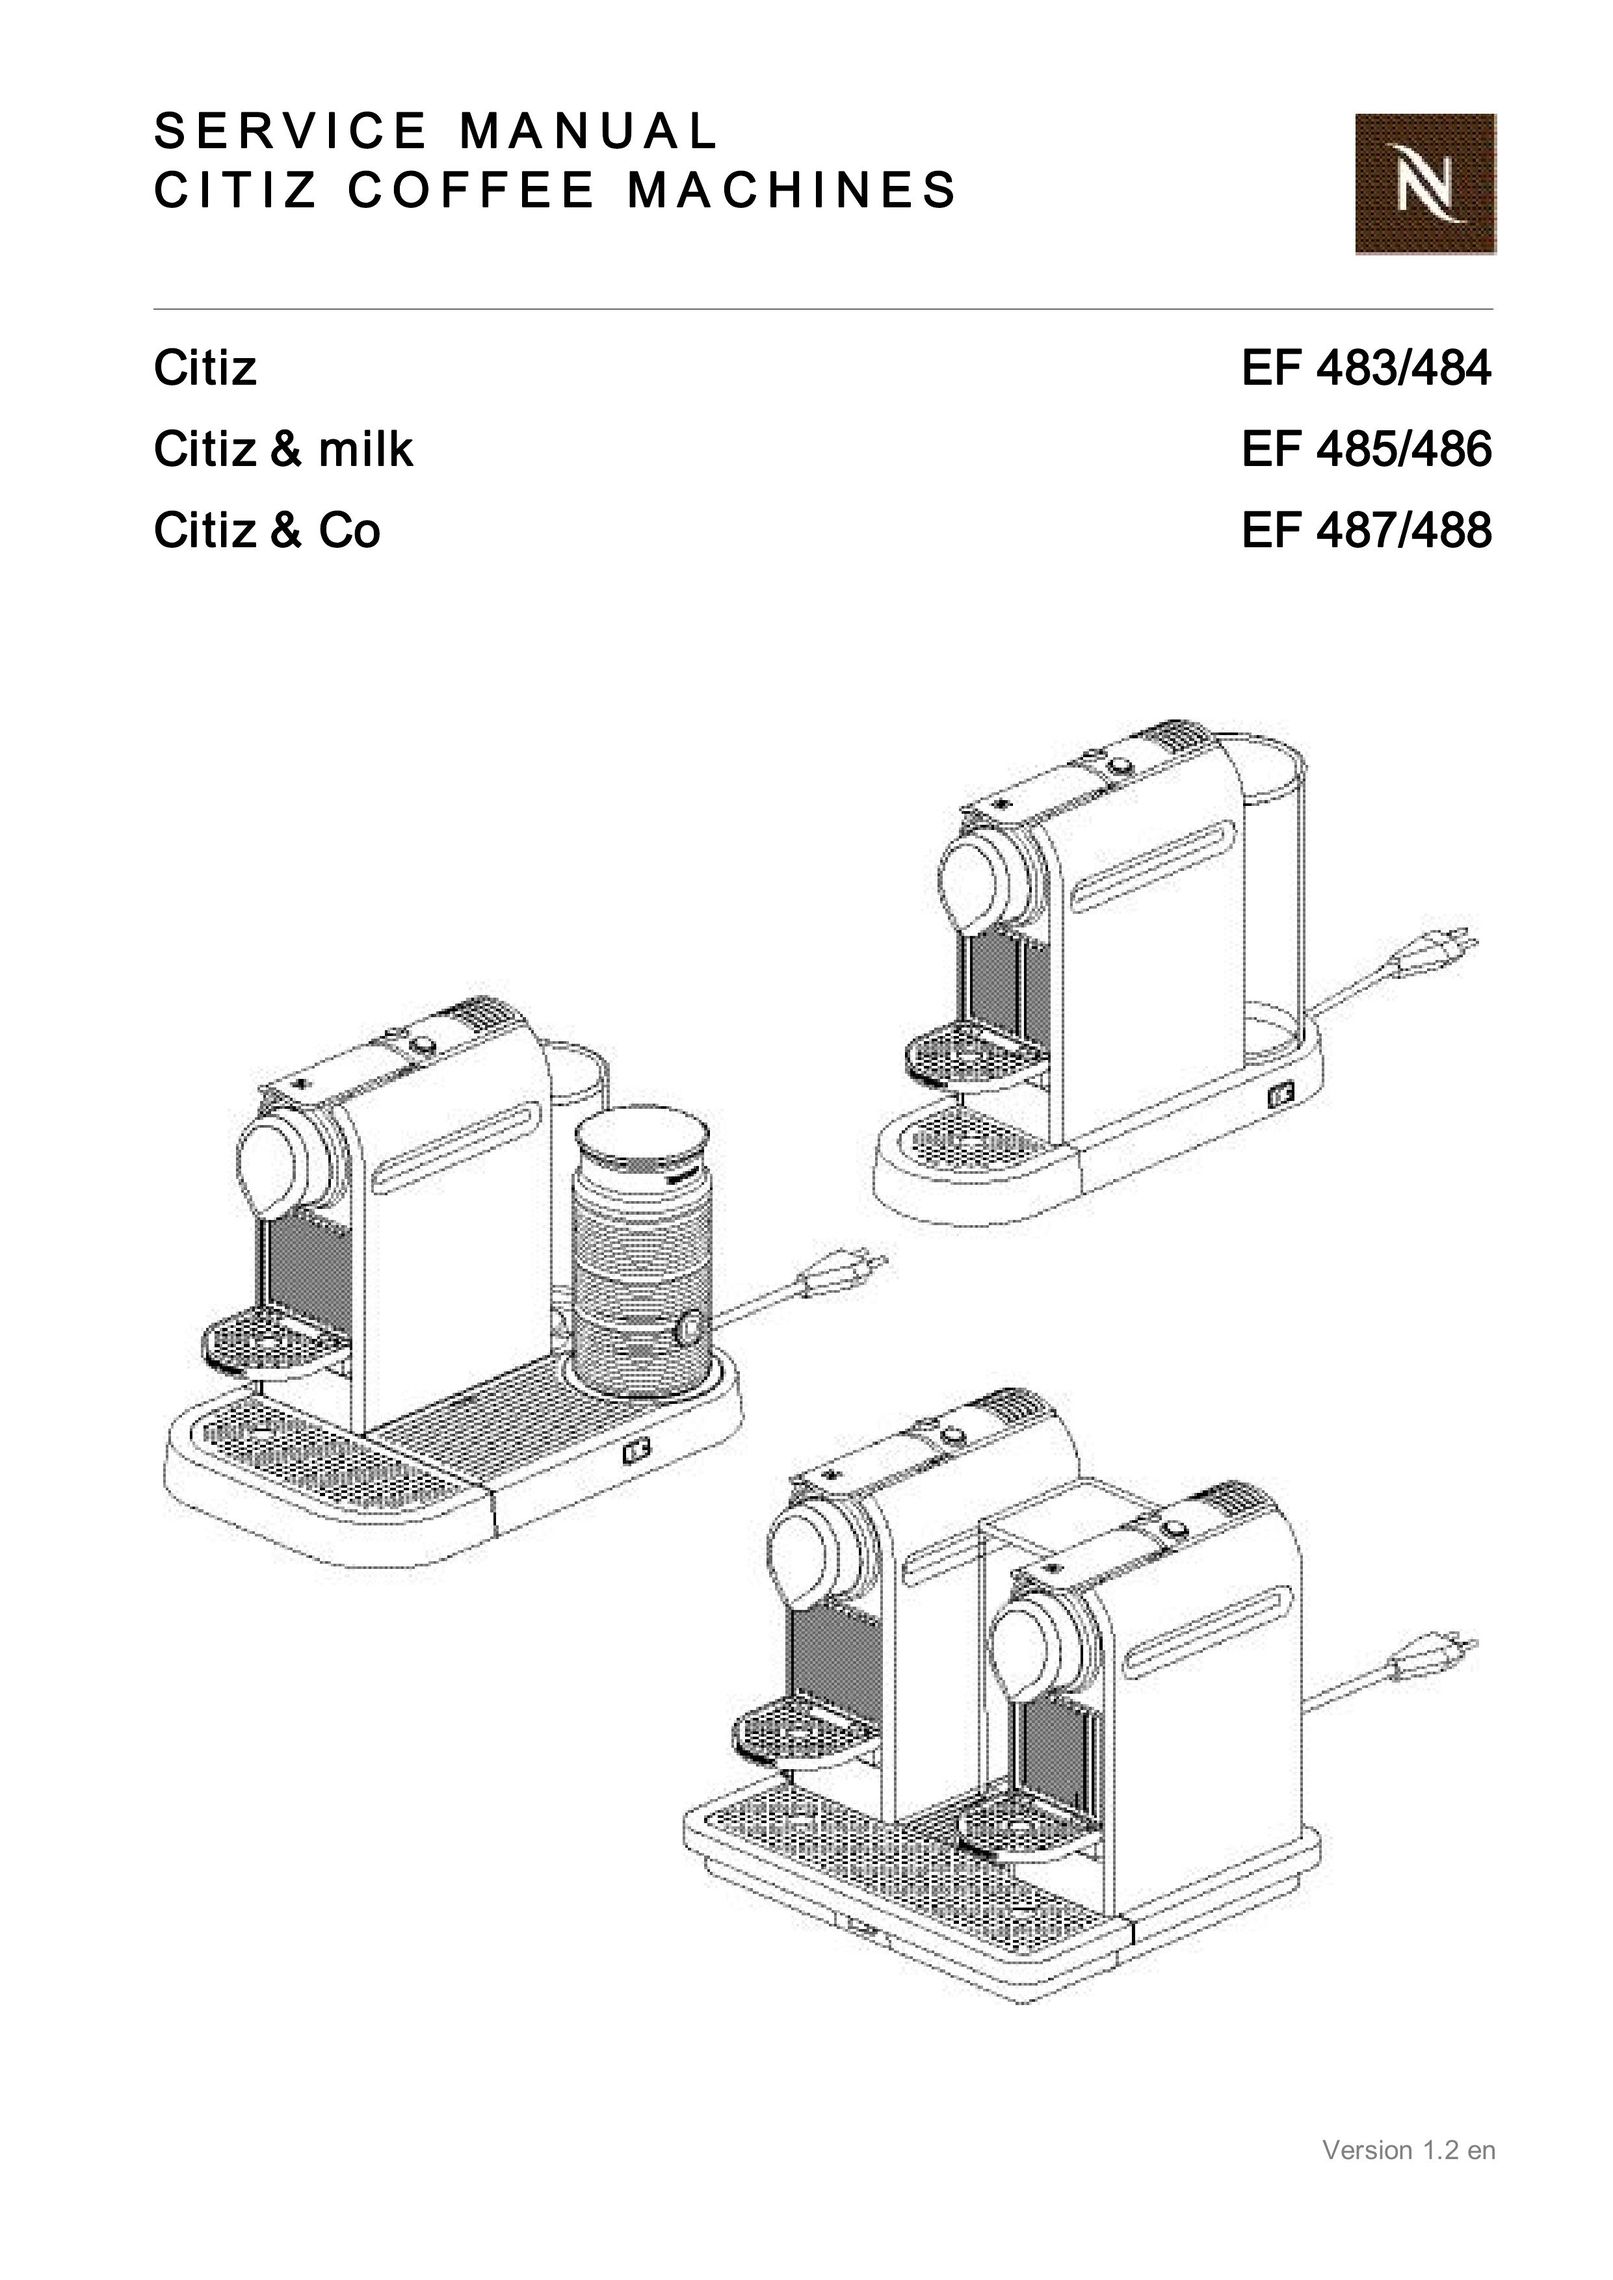 Nespresso EF485/486 Coffeemaker User Manual